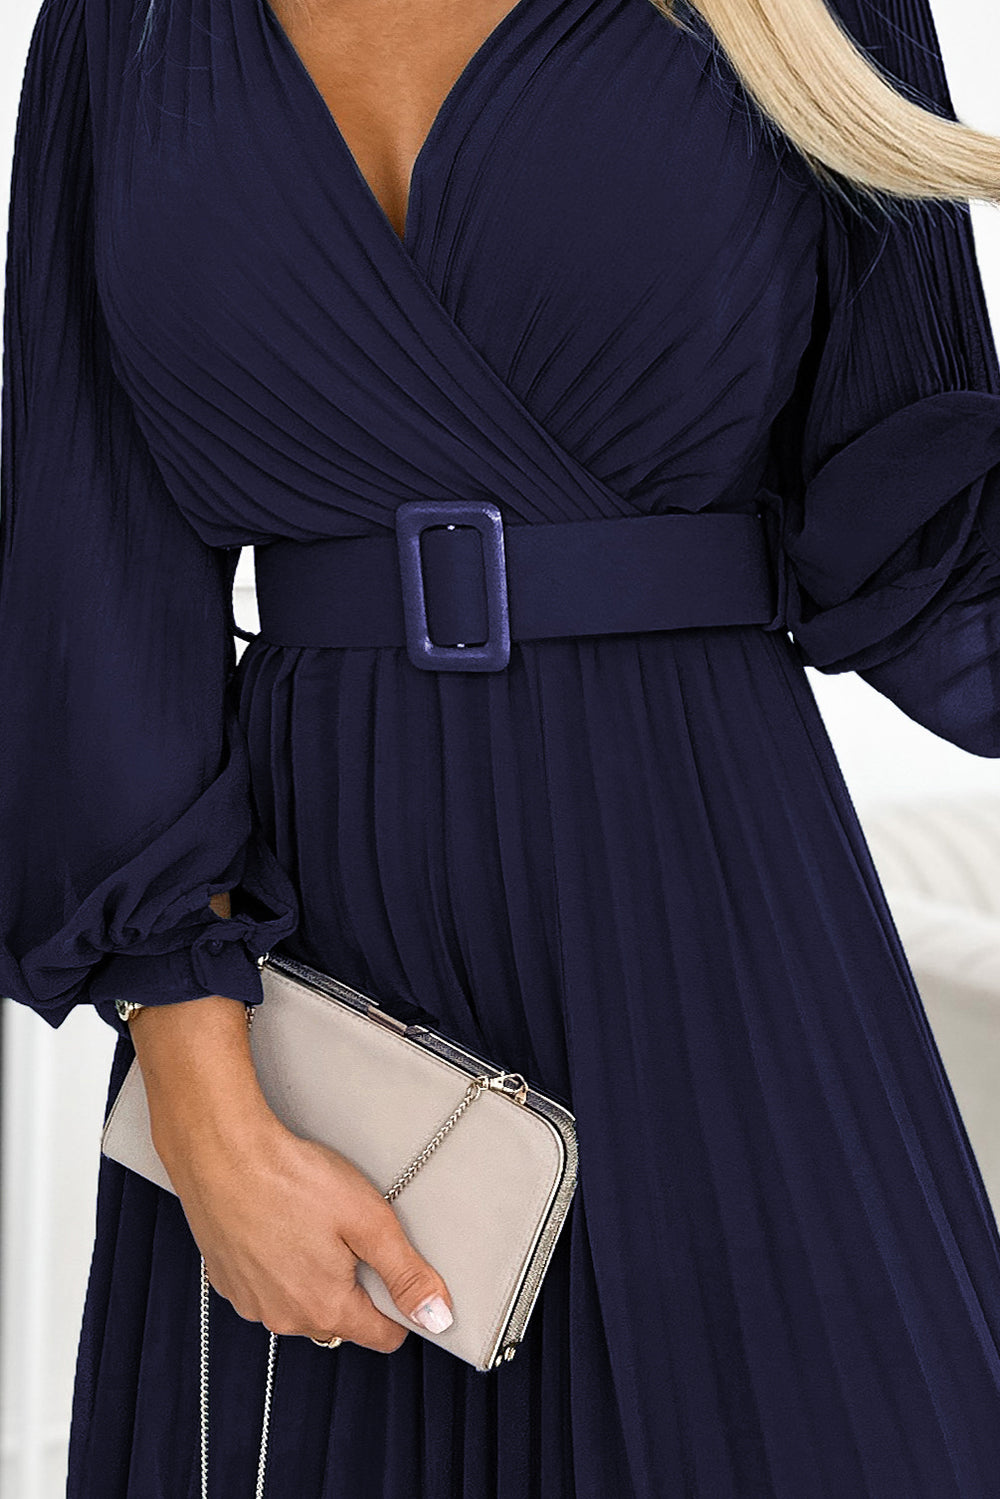 17603-6-414-7 KLARA pleated dress with a belt and a neckline - navy blue-6